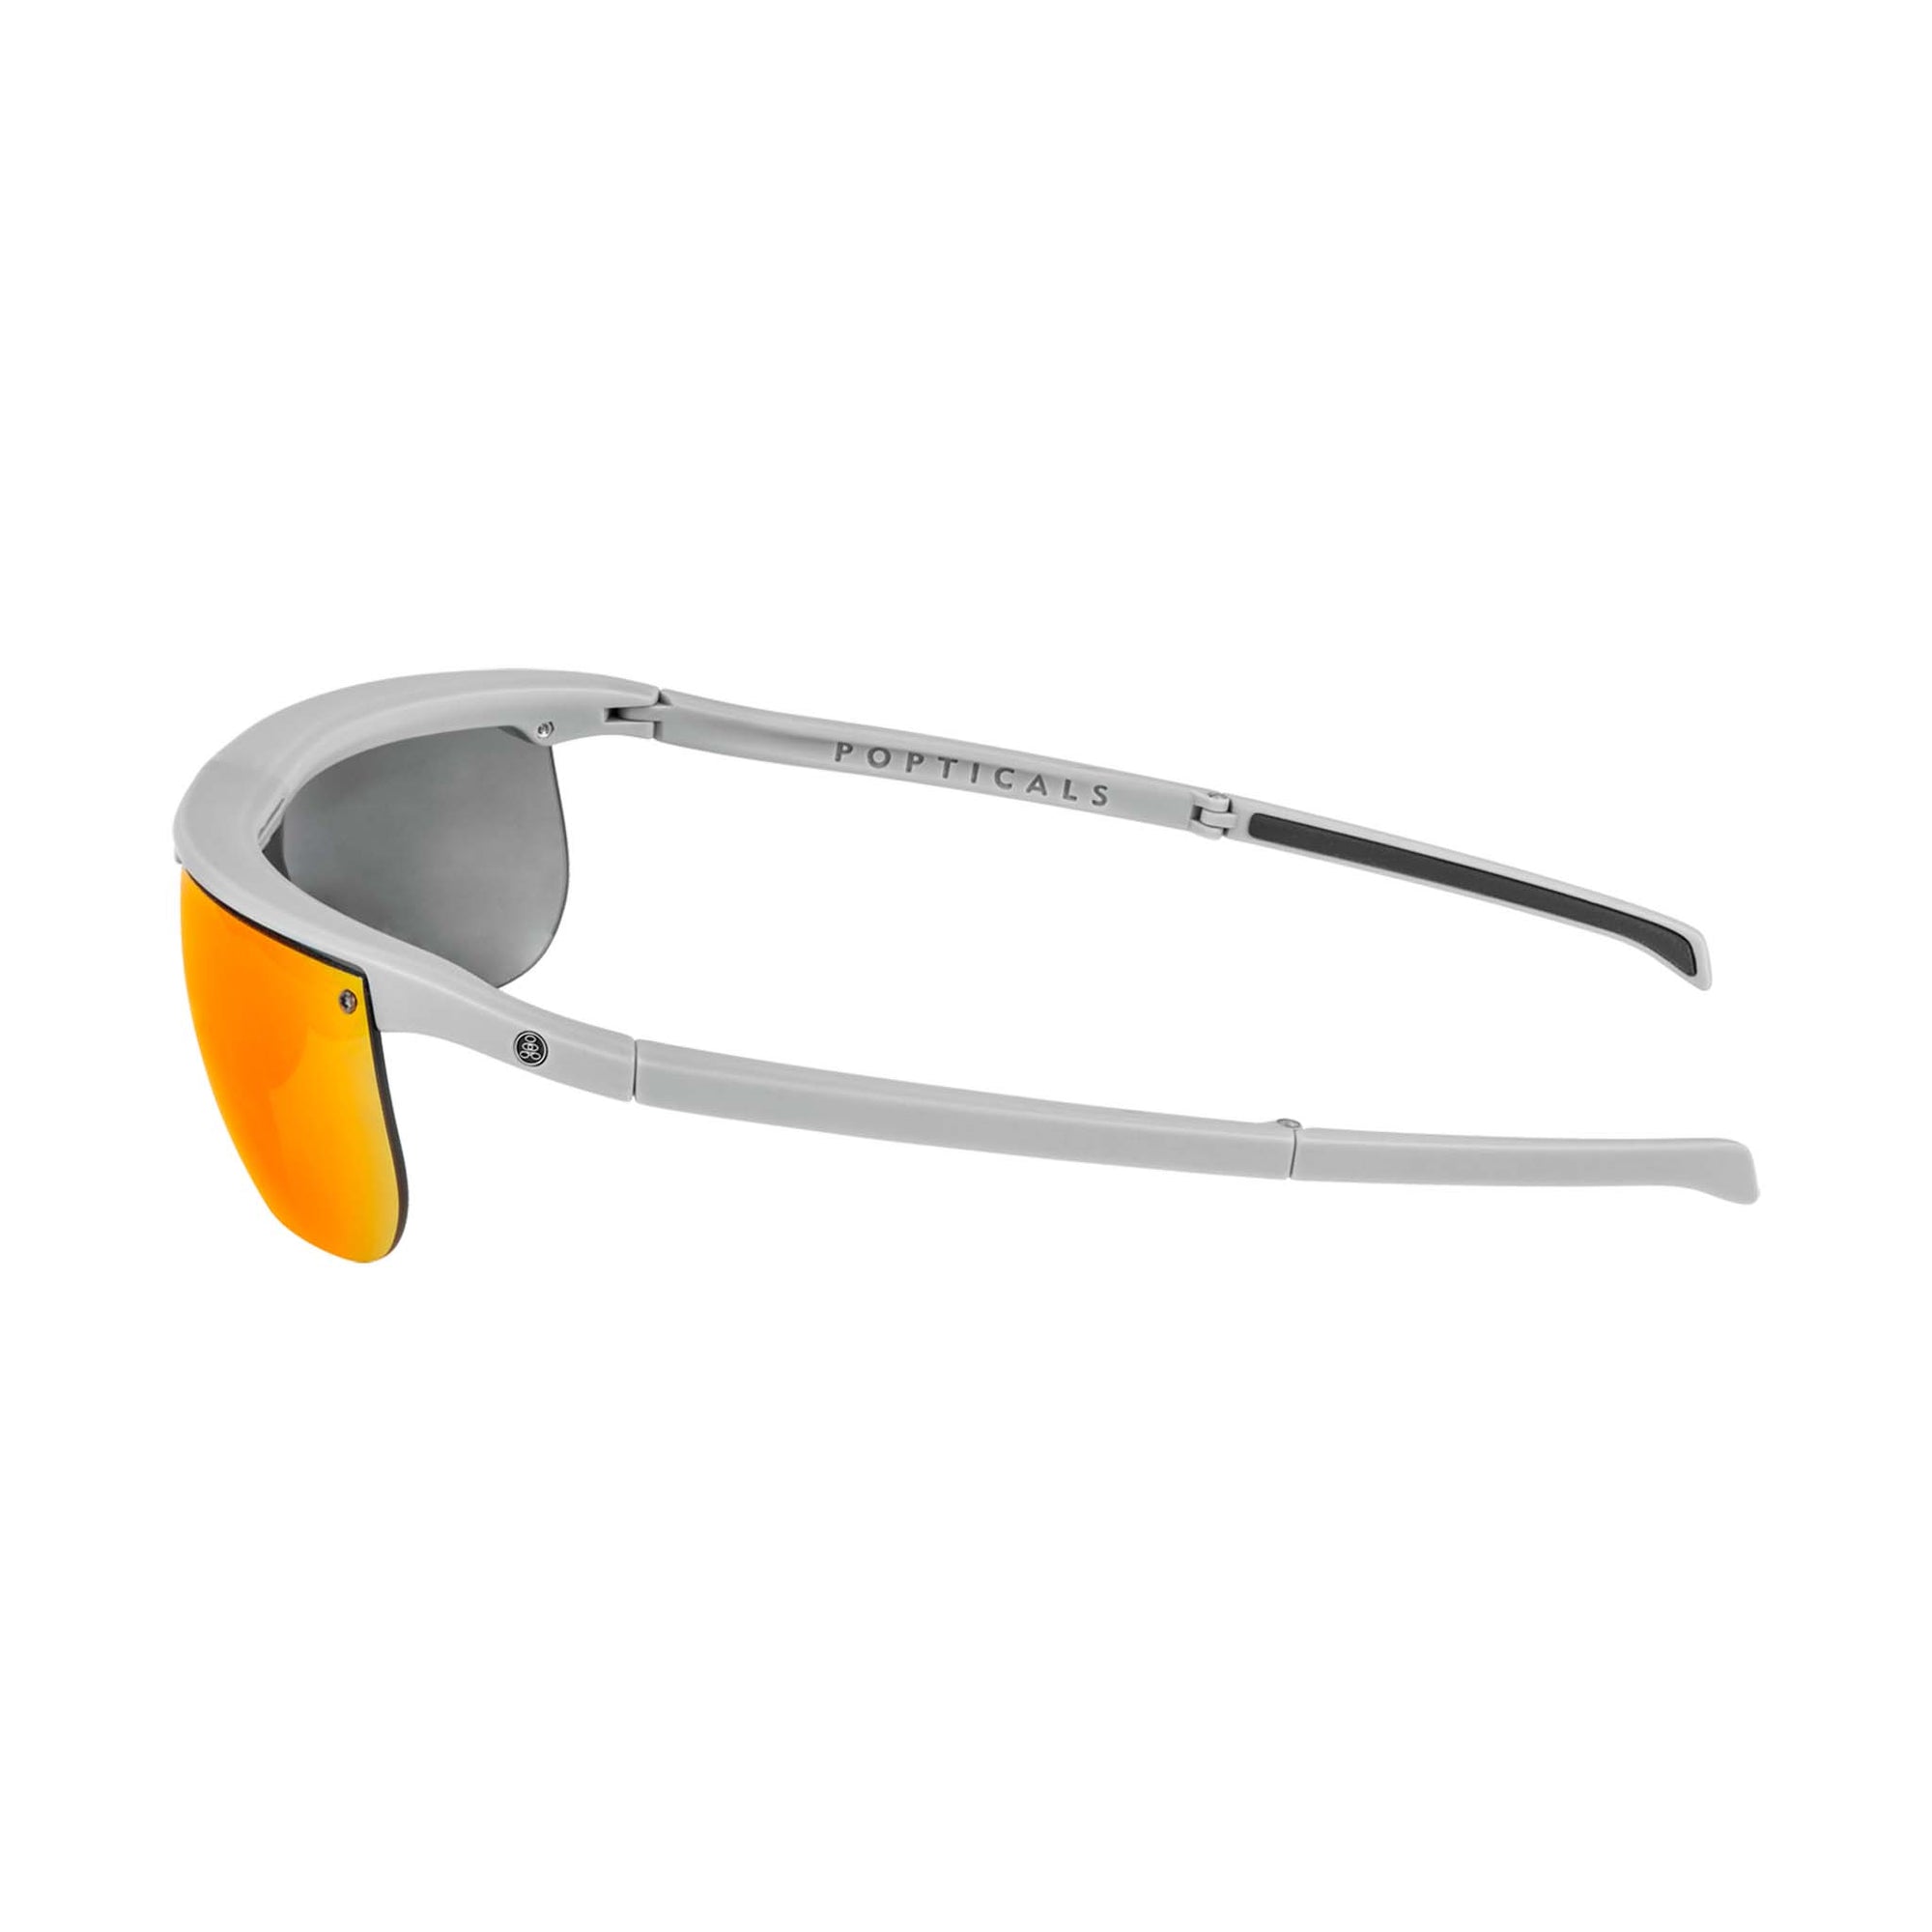 Popticals, Premium Compact Sunglasses, PopArt, 010030-GMON, Polarized Sunglasses, Matte Gray Frame, Gray Lenses with Orange Mirror Finish, Side View